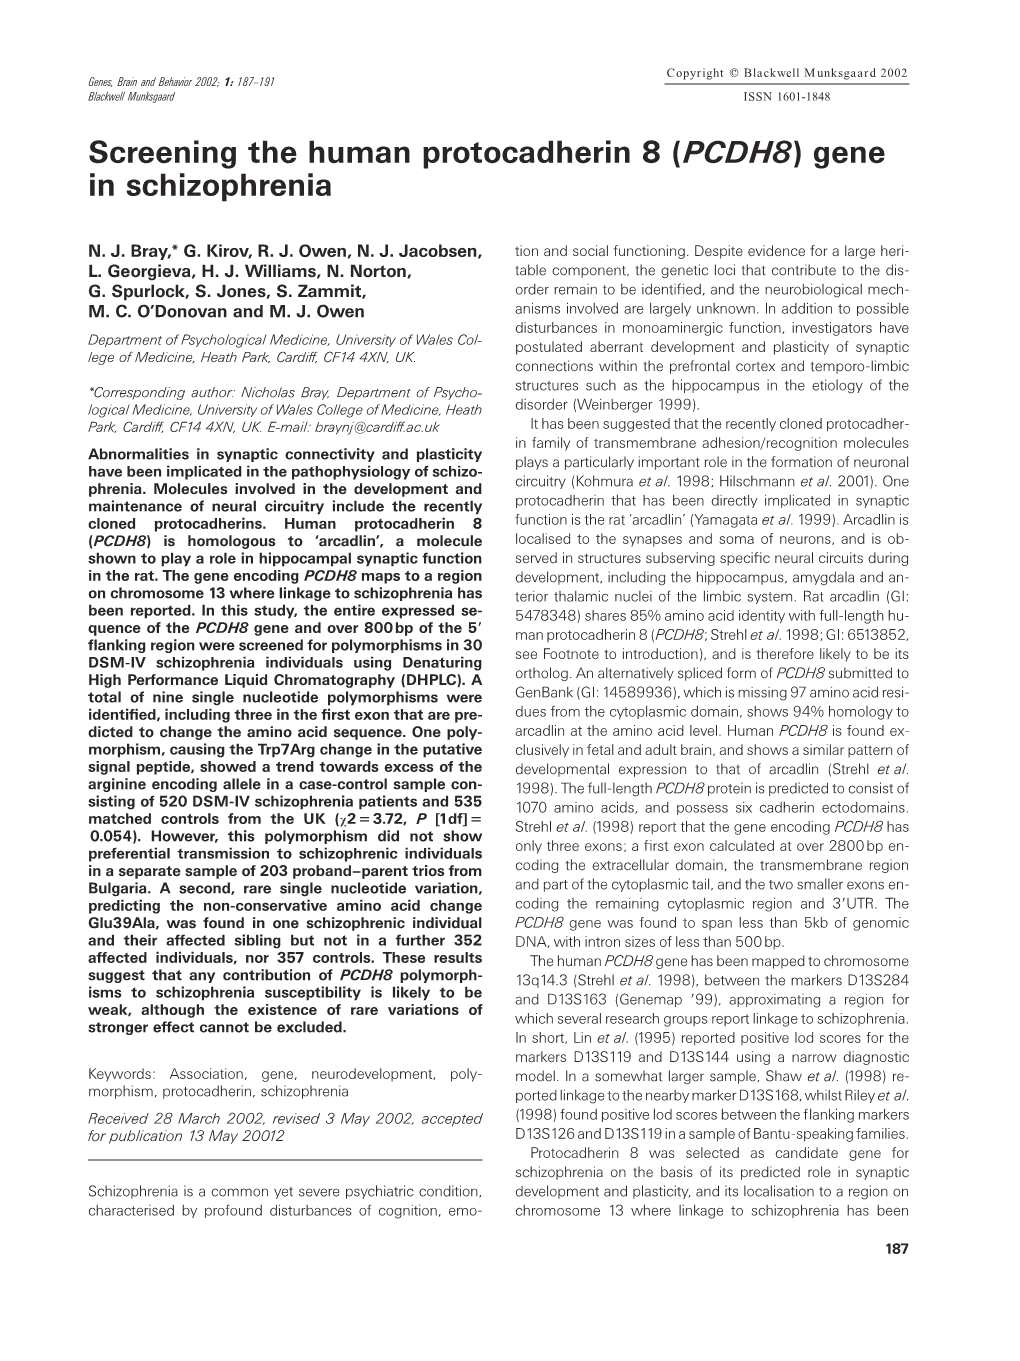 Screening the Human Protocadherin 8 (PCDH8) Gene in Schizophrenia